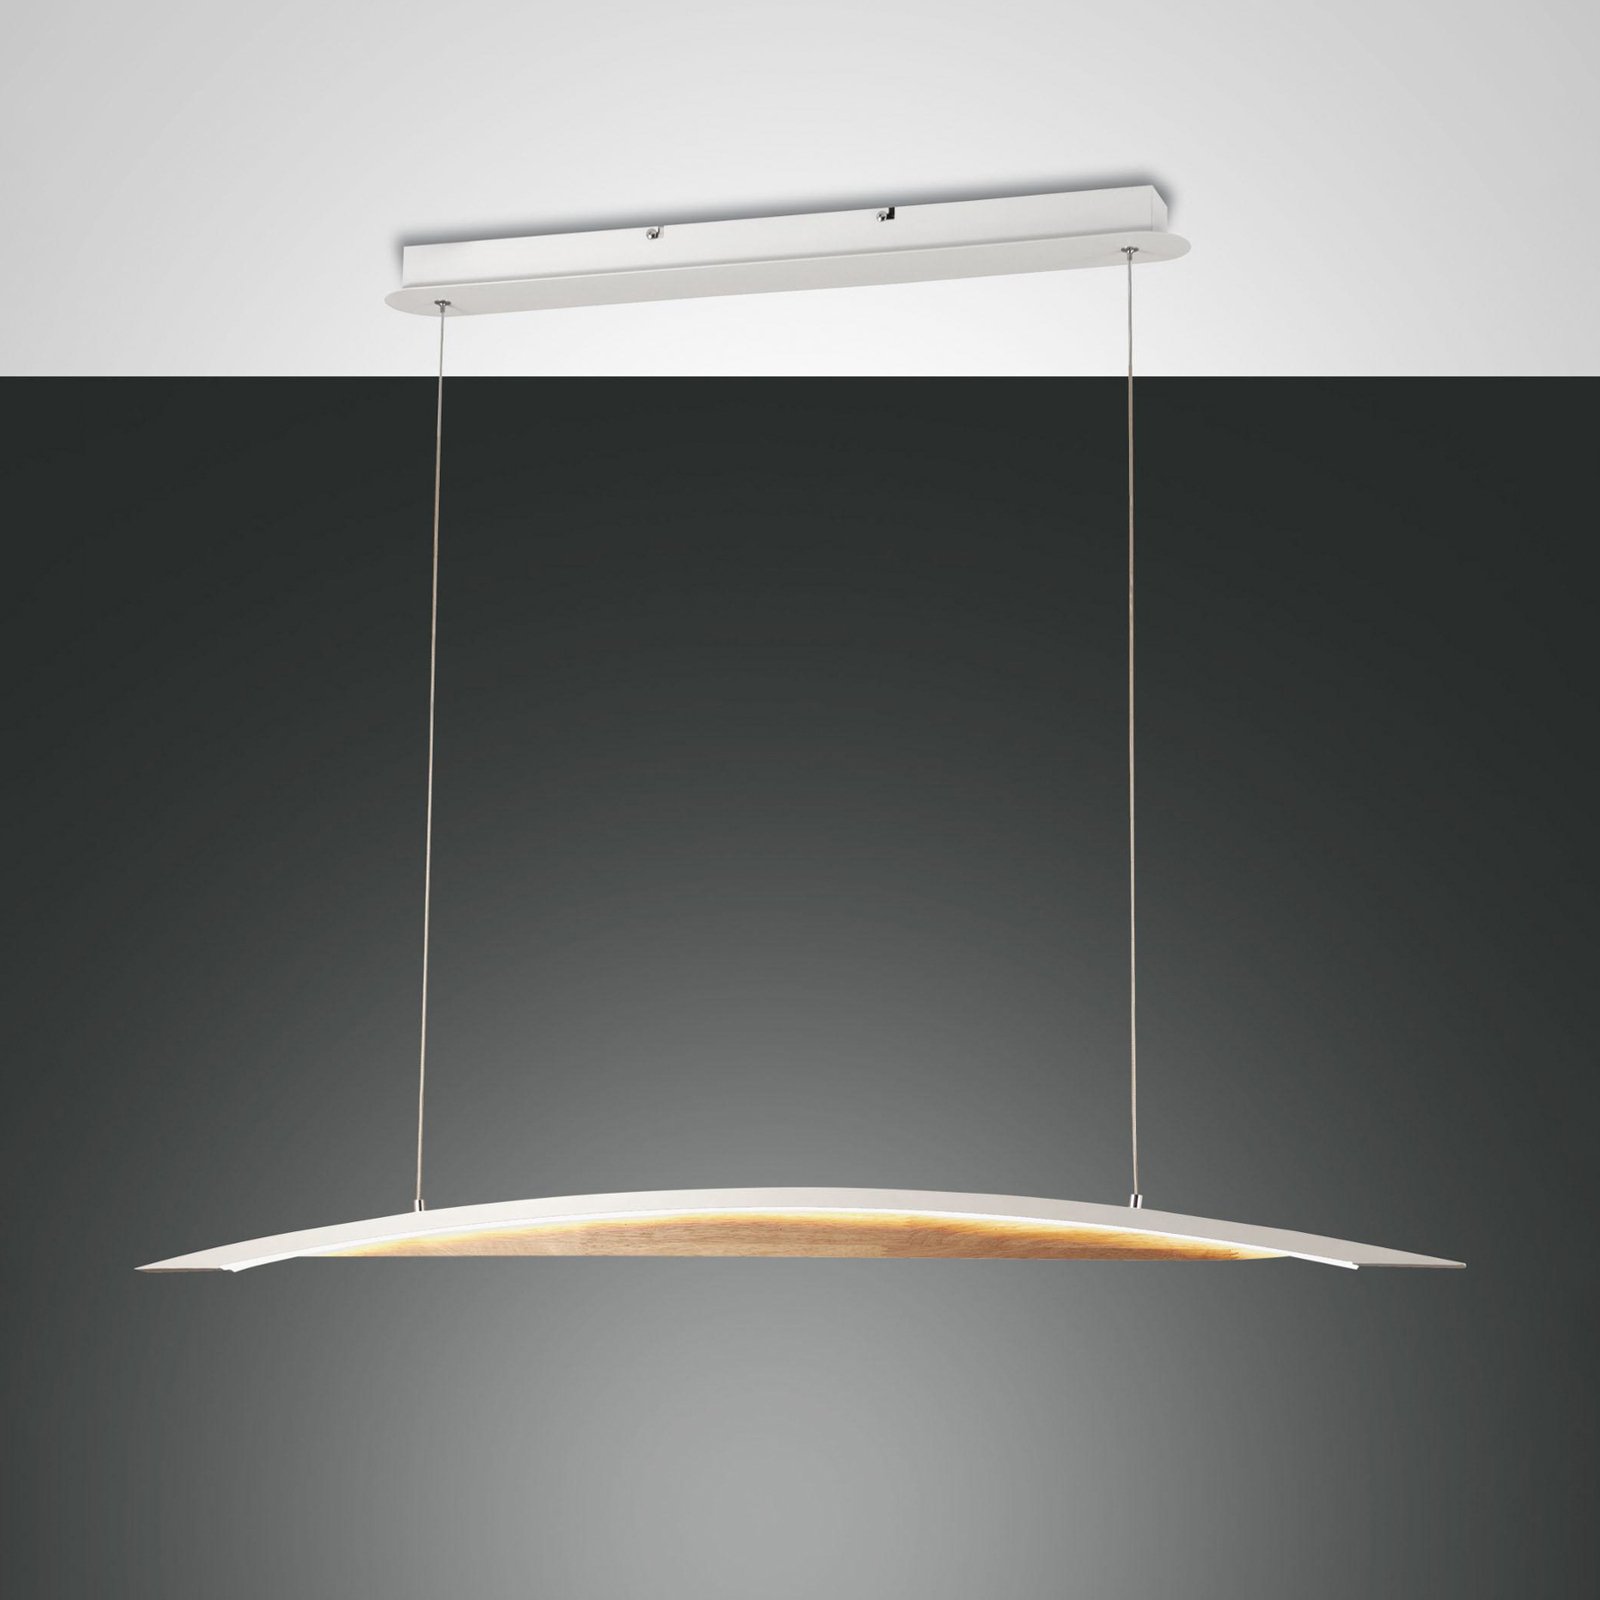 LED-Hängeleuchte Cordoba, Länge 110 cm, Metall/Holz, dimmbar